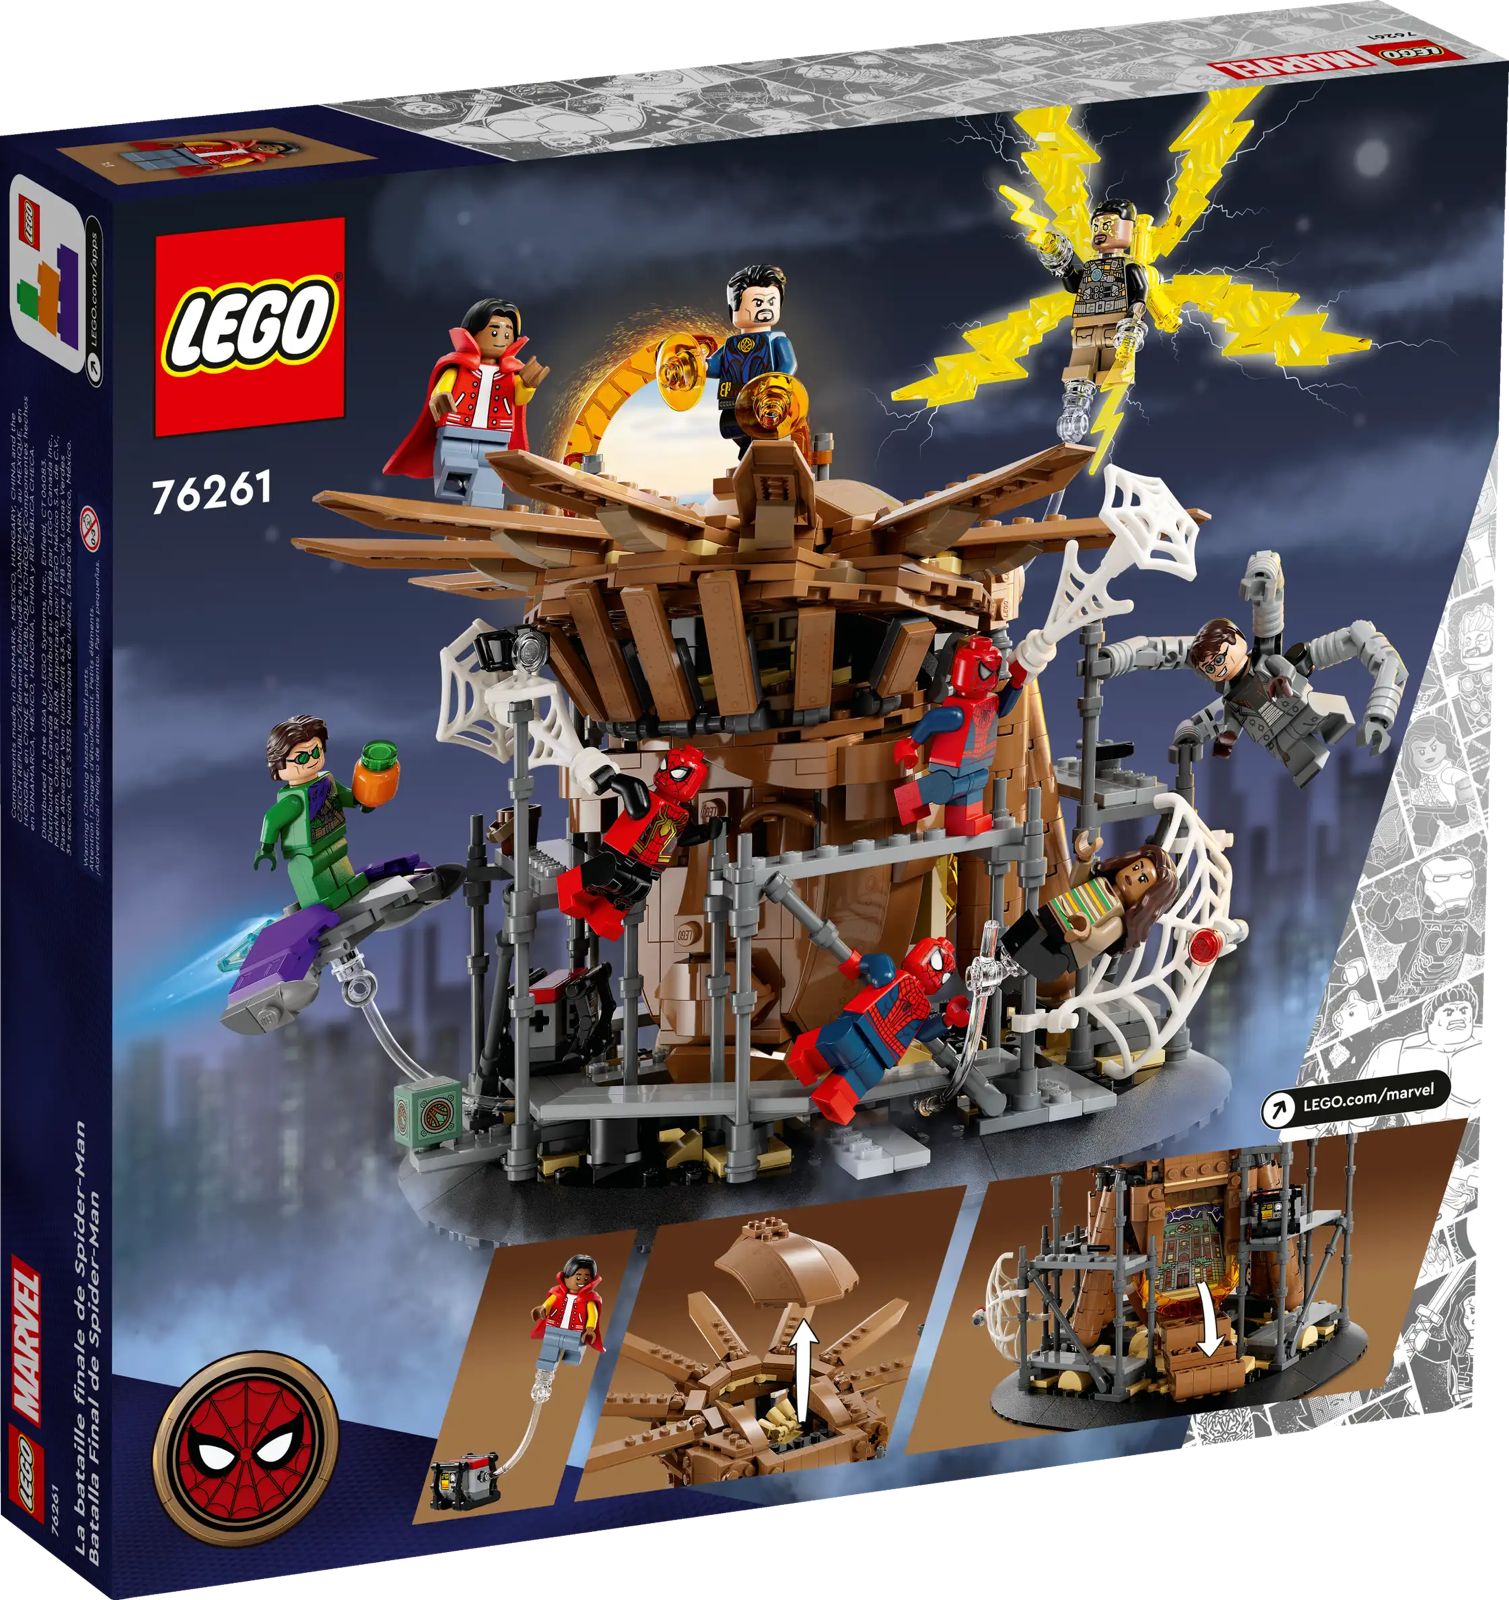 Lego Marvel Spider-Man Batalla Final De Spider-Man 76261